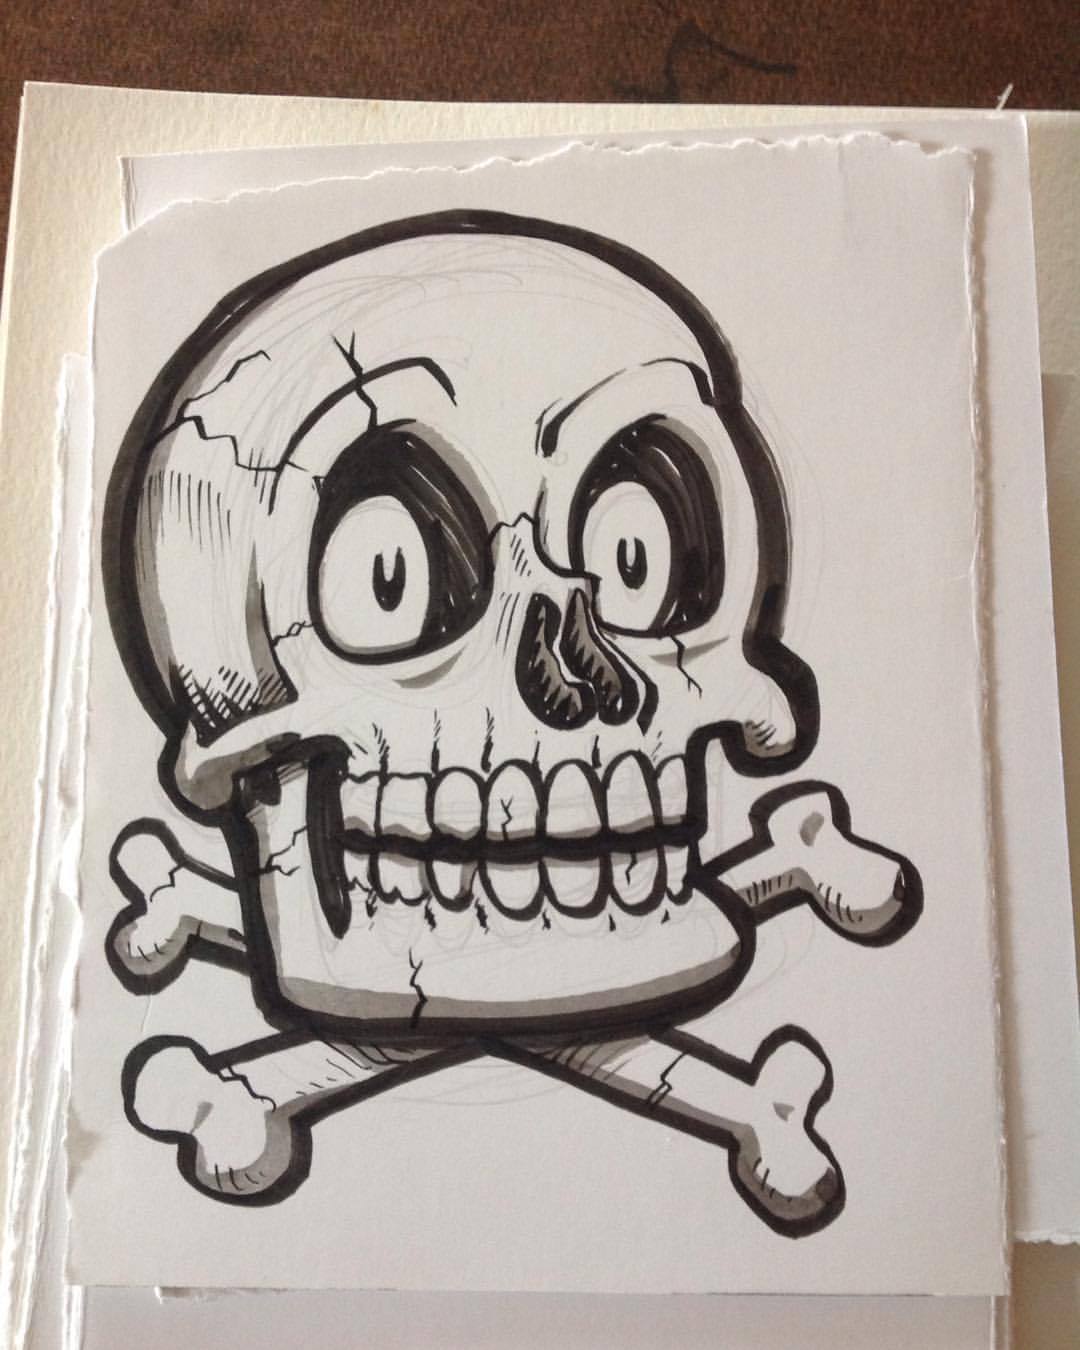 Day 20: A Skull. #sketch #sketches #sketchbook #drawing #drawlloween #doodle #ink #inktober #halloween #scary #skull #bones